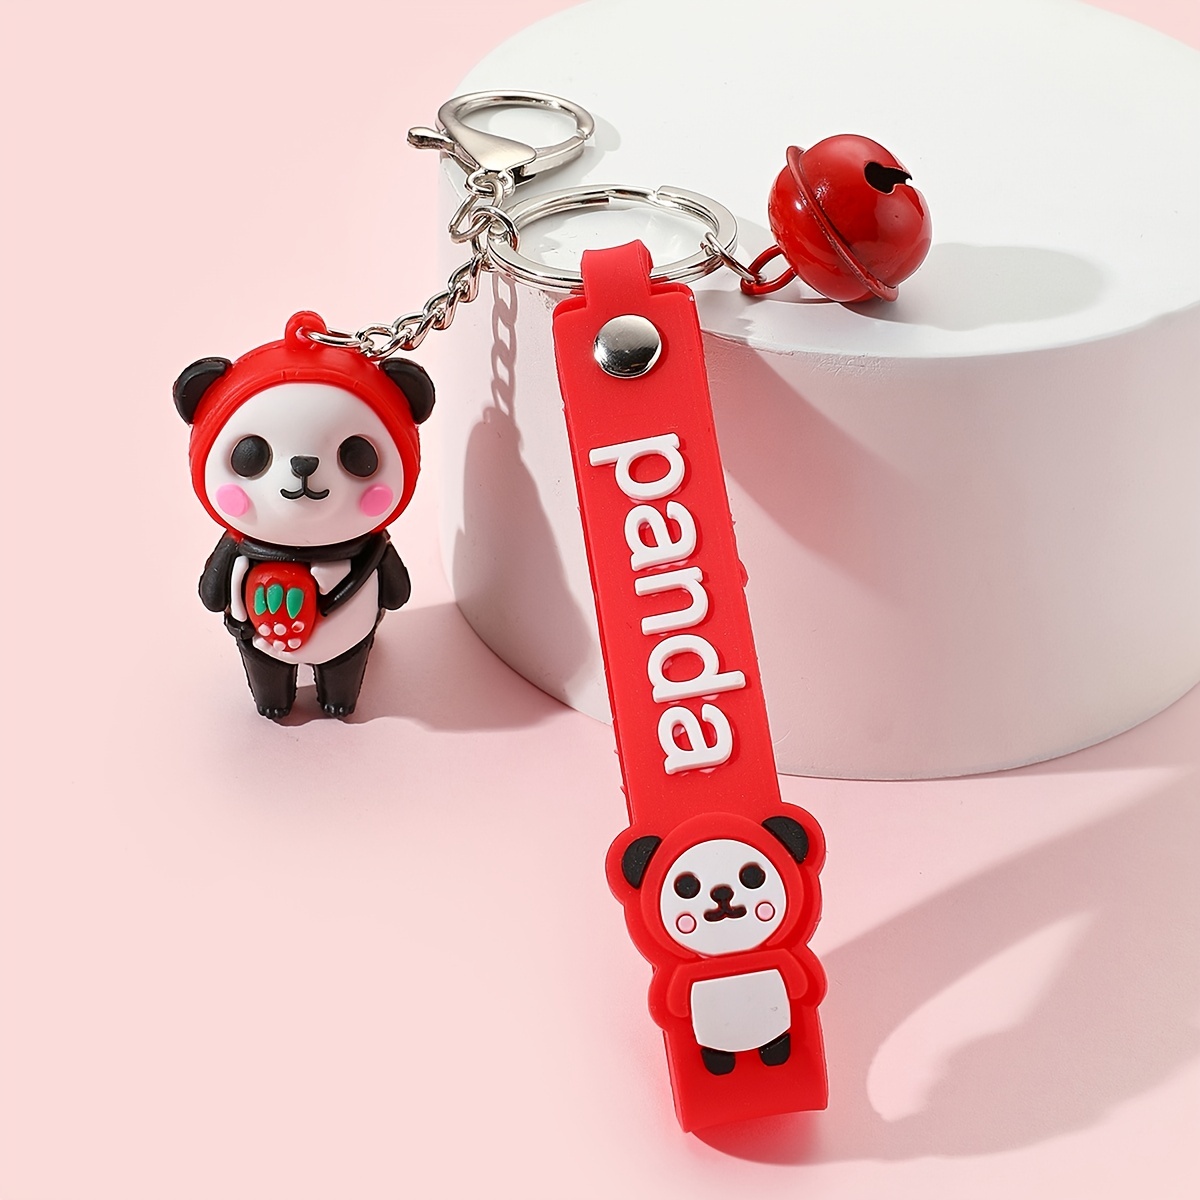 PVC Panda Keychain Pendant Cartoon Animal Cute Bag Key Chain Keyring  Ornament Bag Purse Charm Accessories